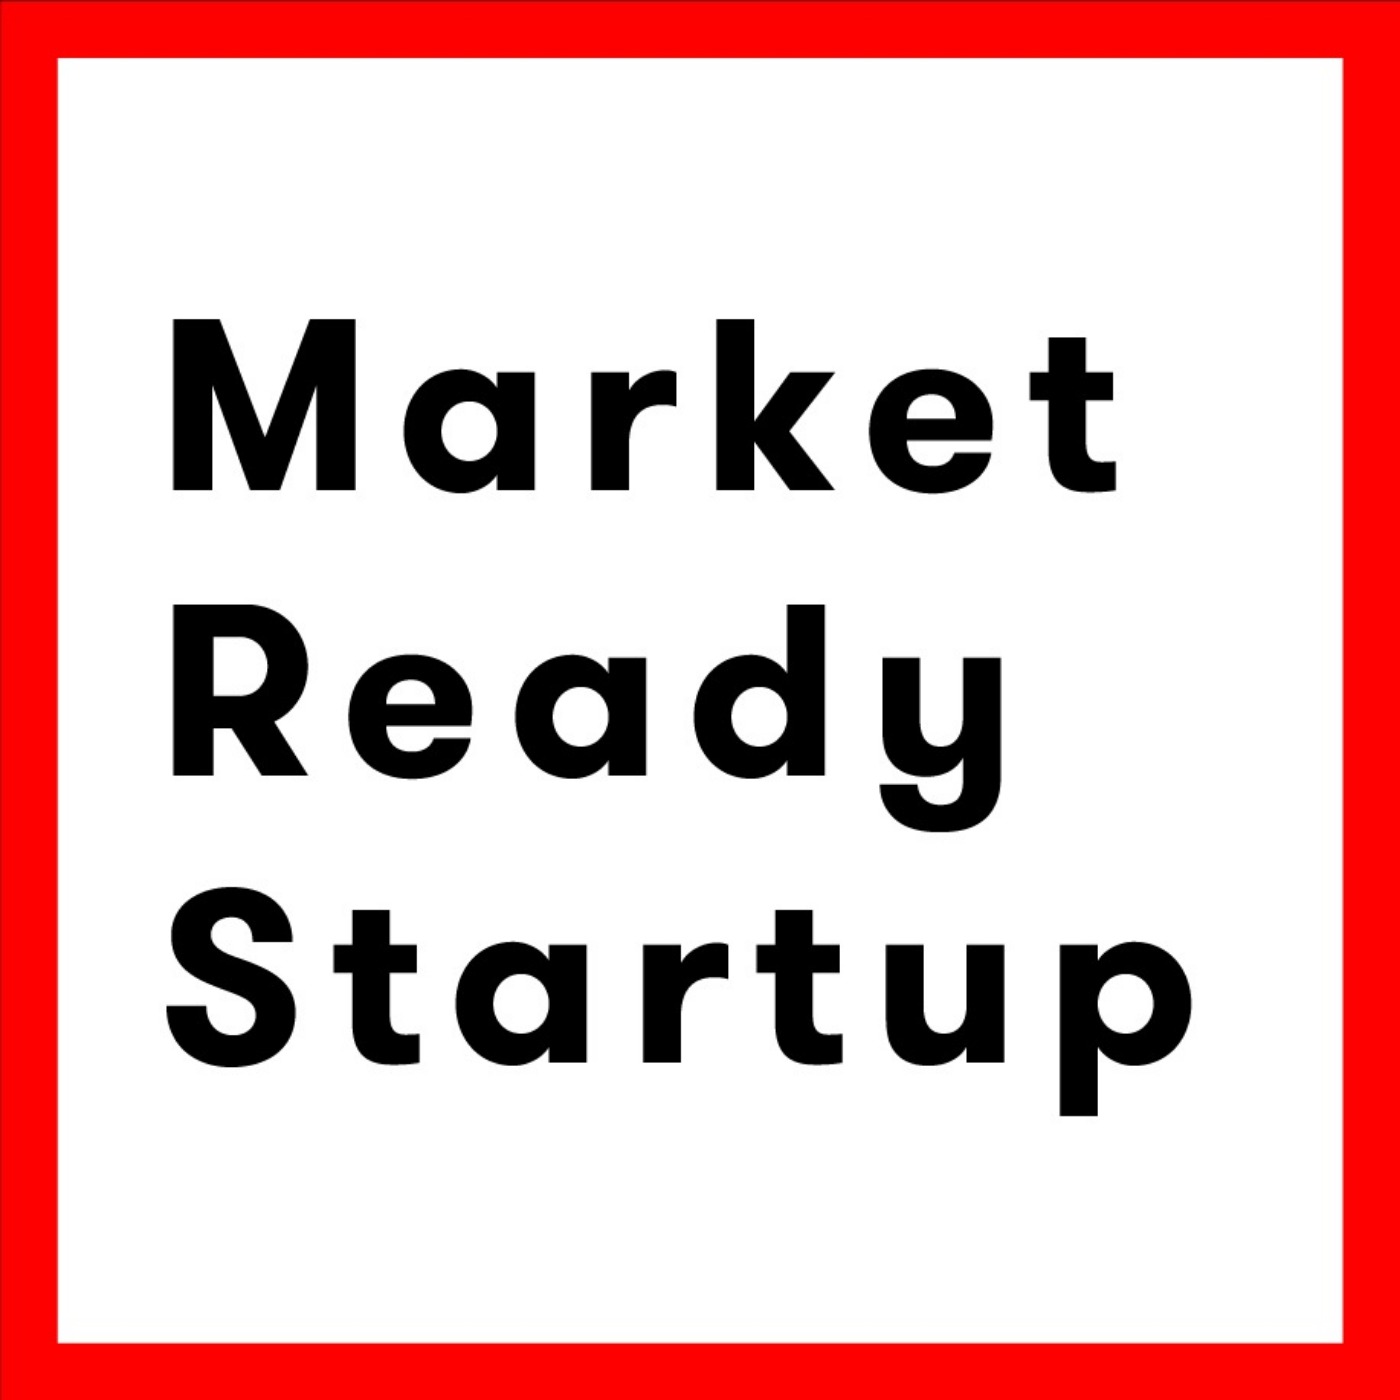 Market Ready Startup